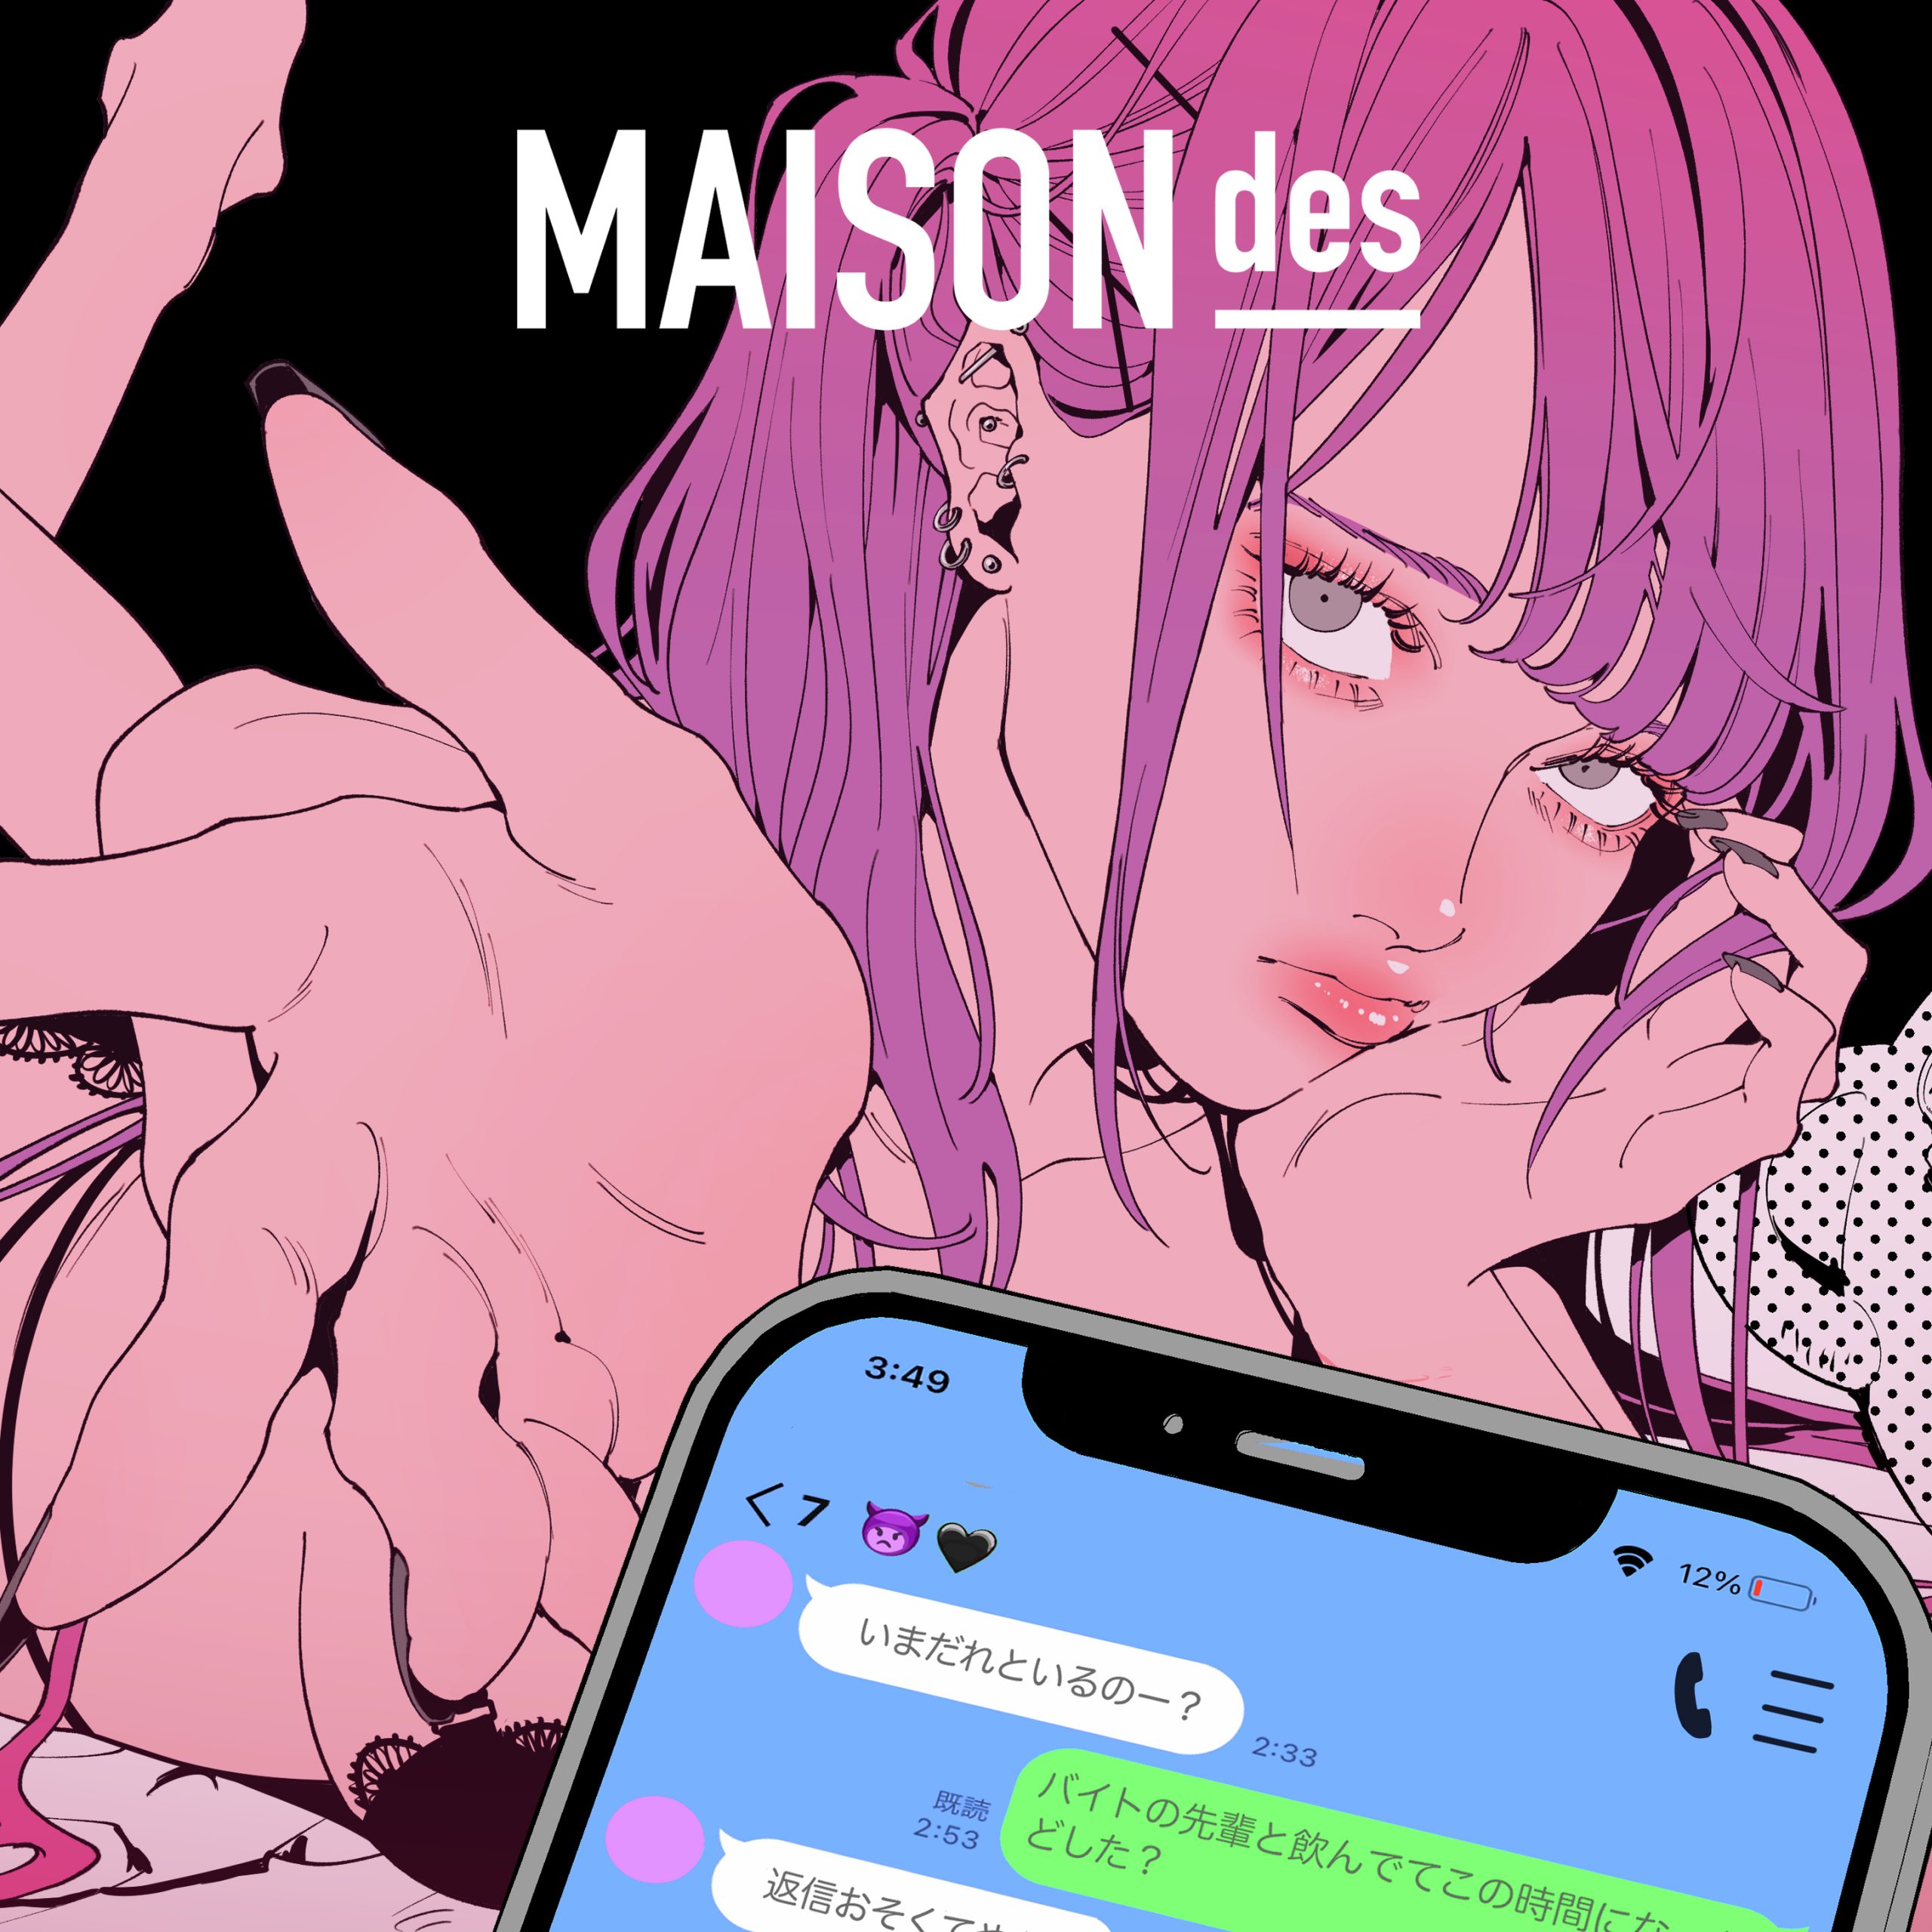 MAISON-des-Keitai-Mishiteyo-Cover-scaled MAISONdes Releases “Ketai Mishiteyo (Show Me Your Phone) feat. Hashimero, maeshima soshi” with Music Video!